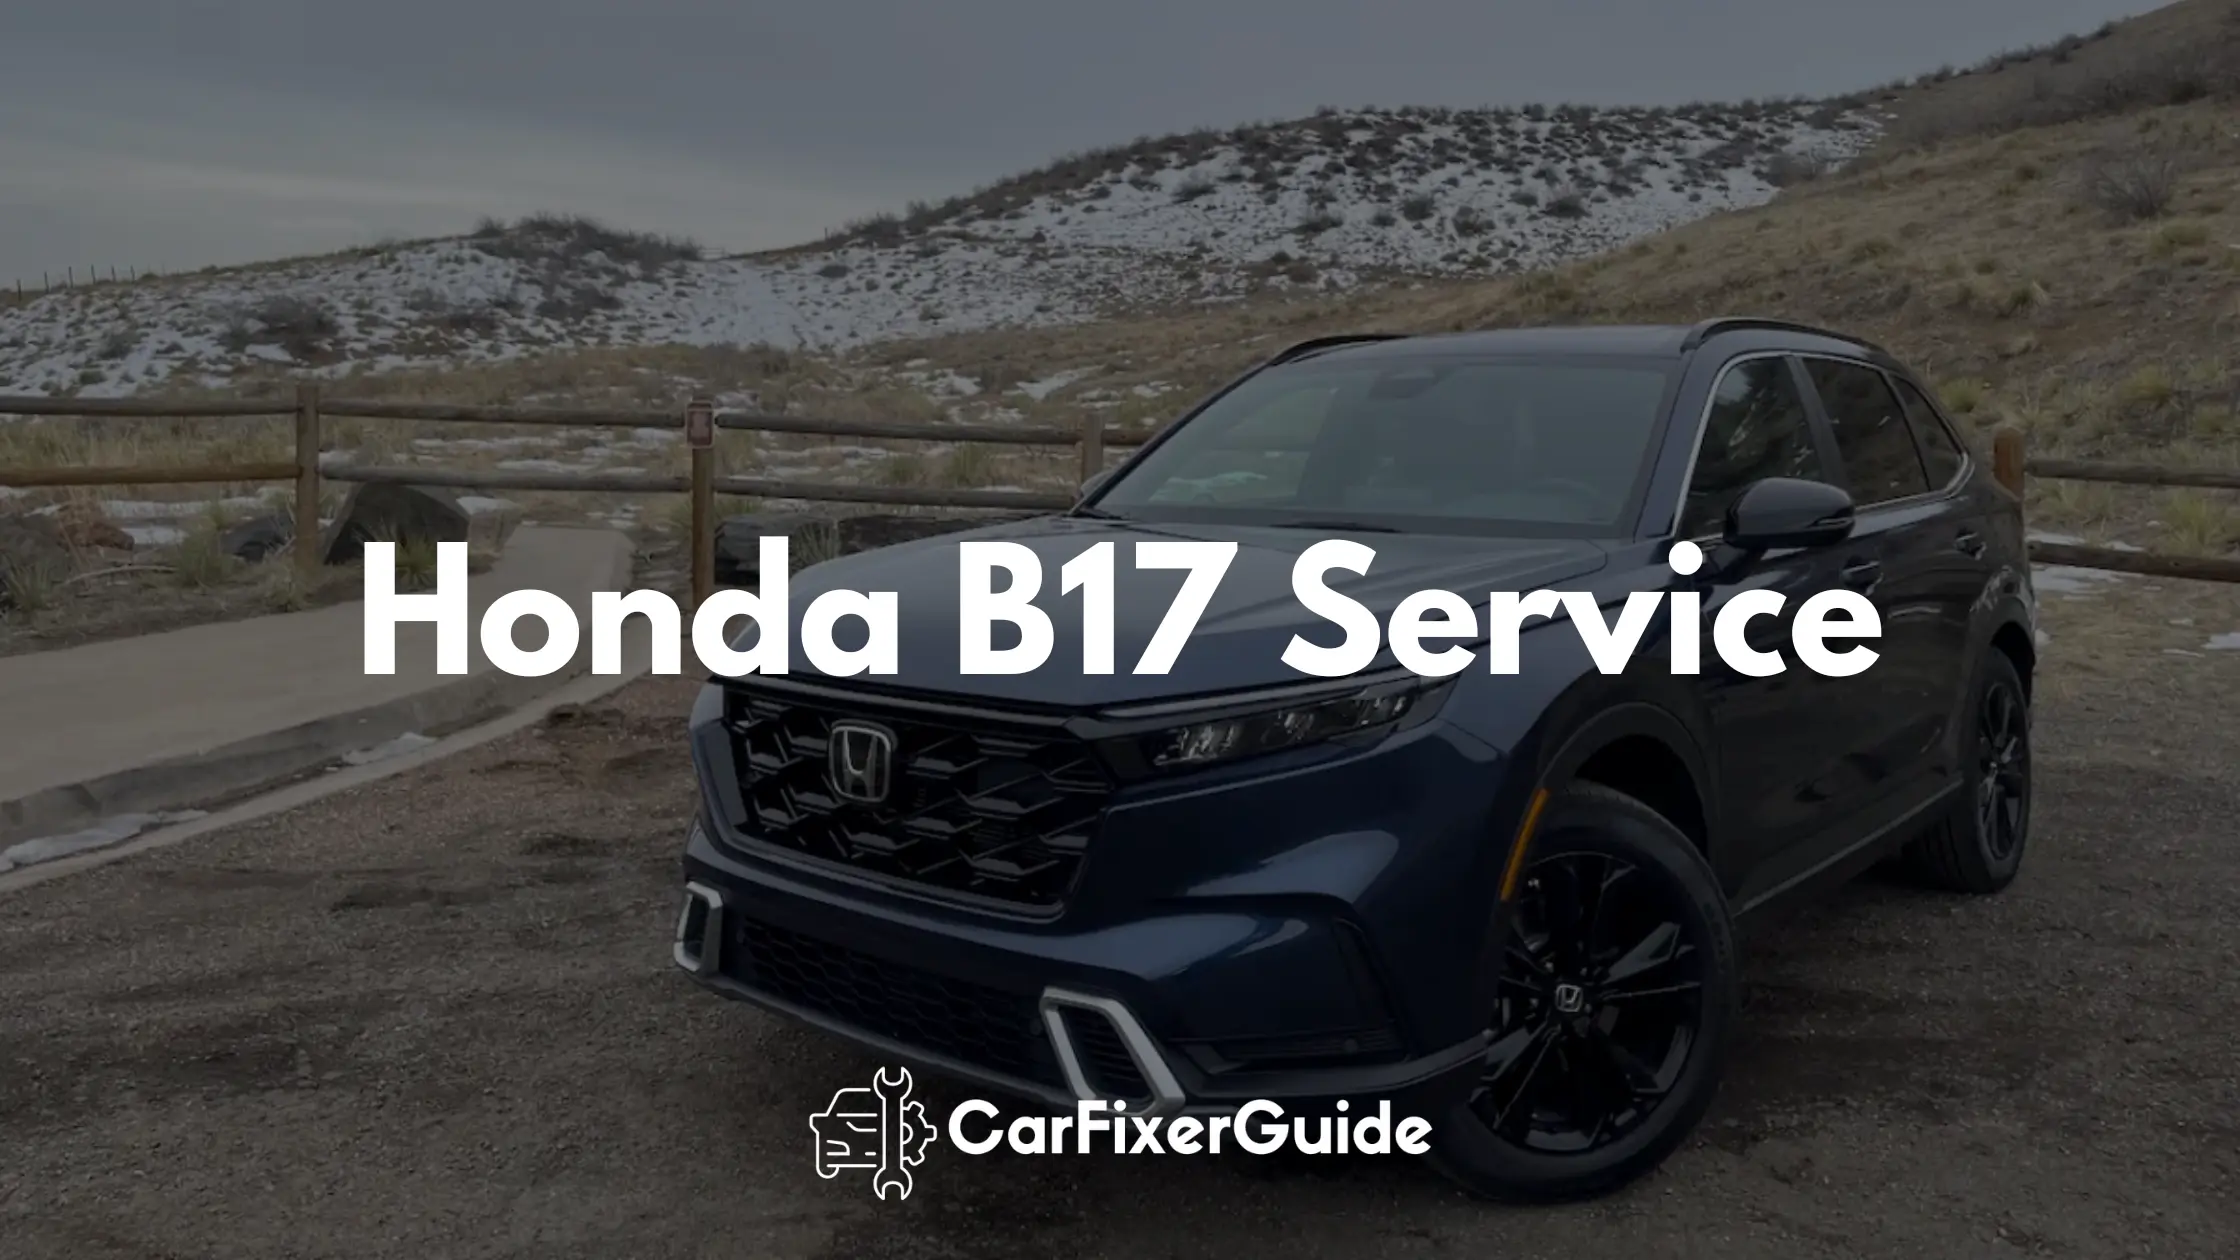 Honda B17 Service